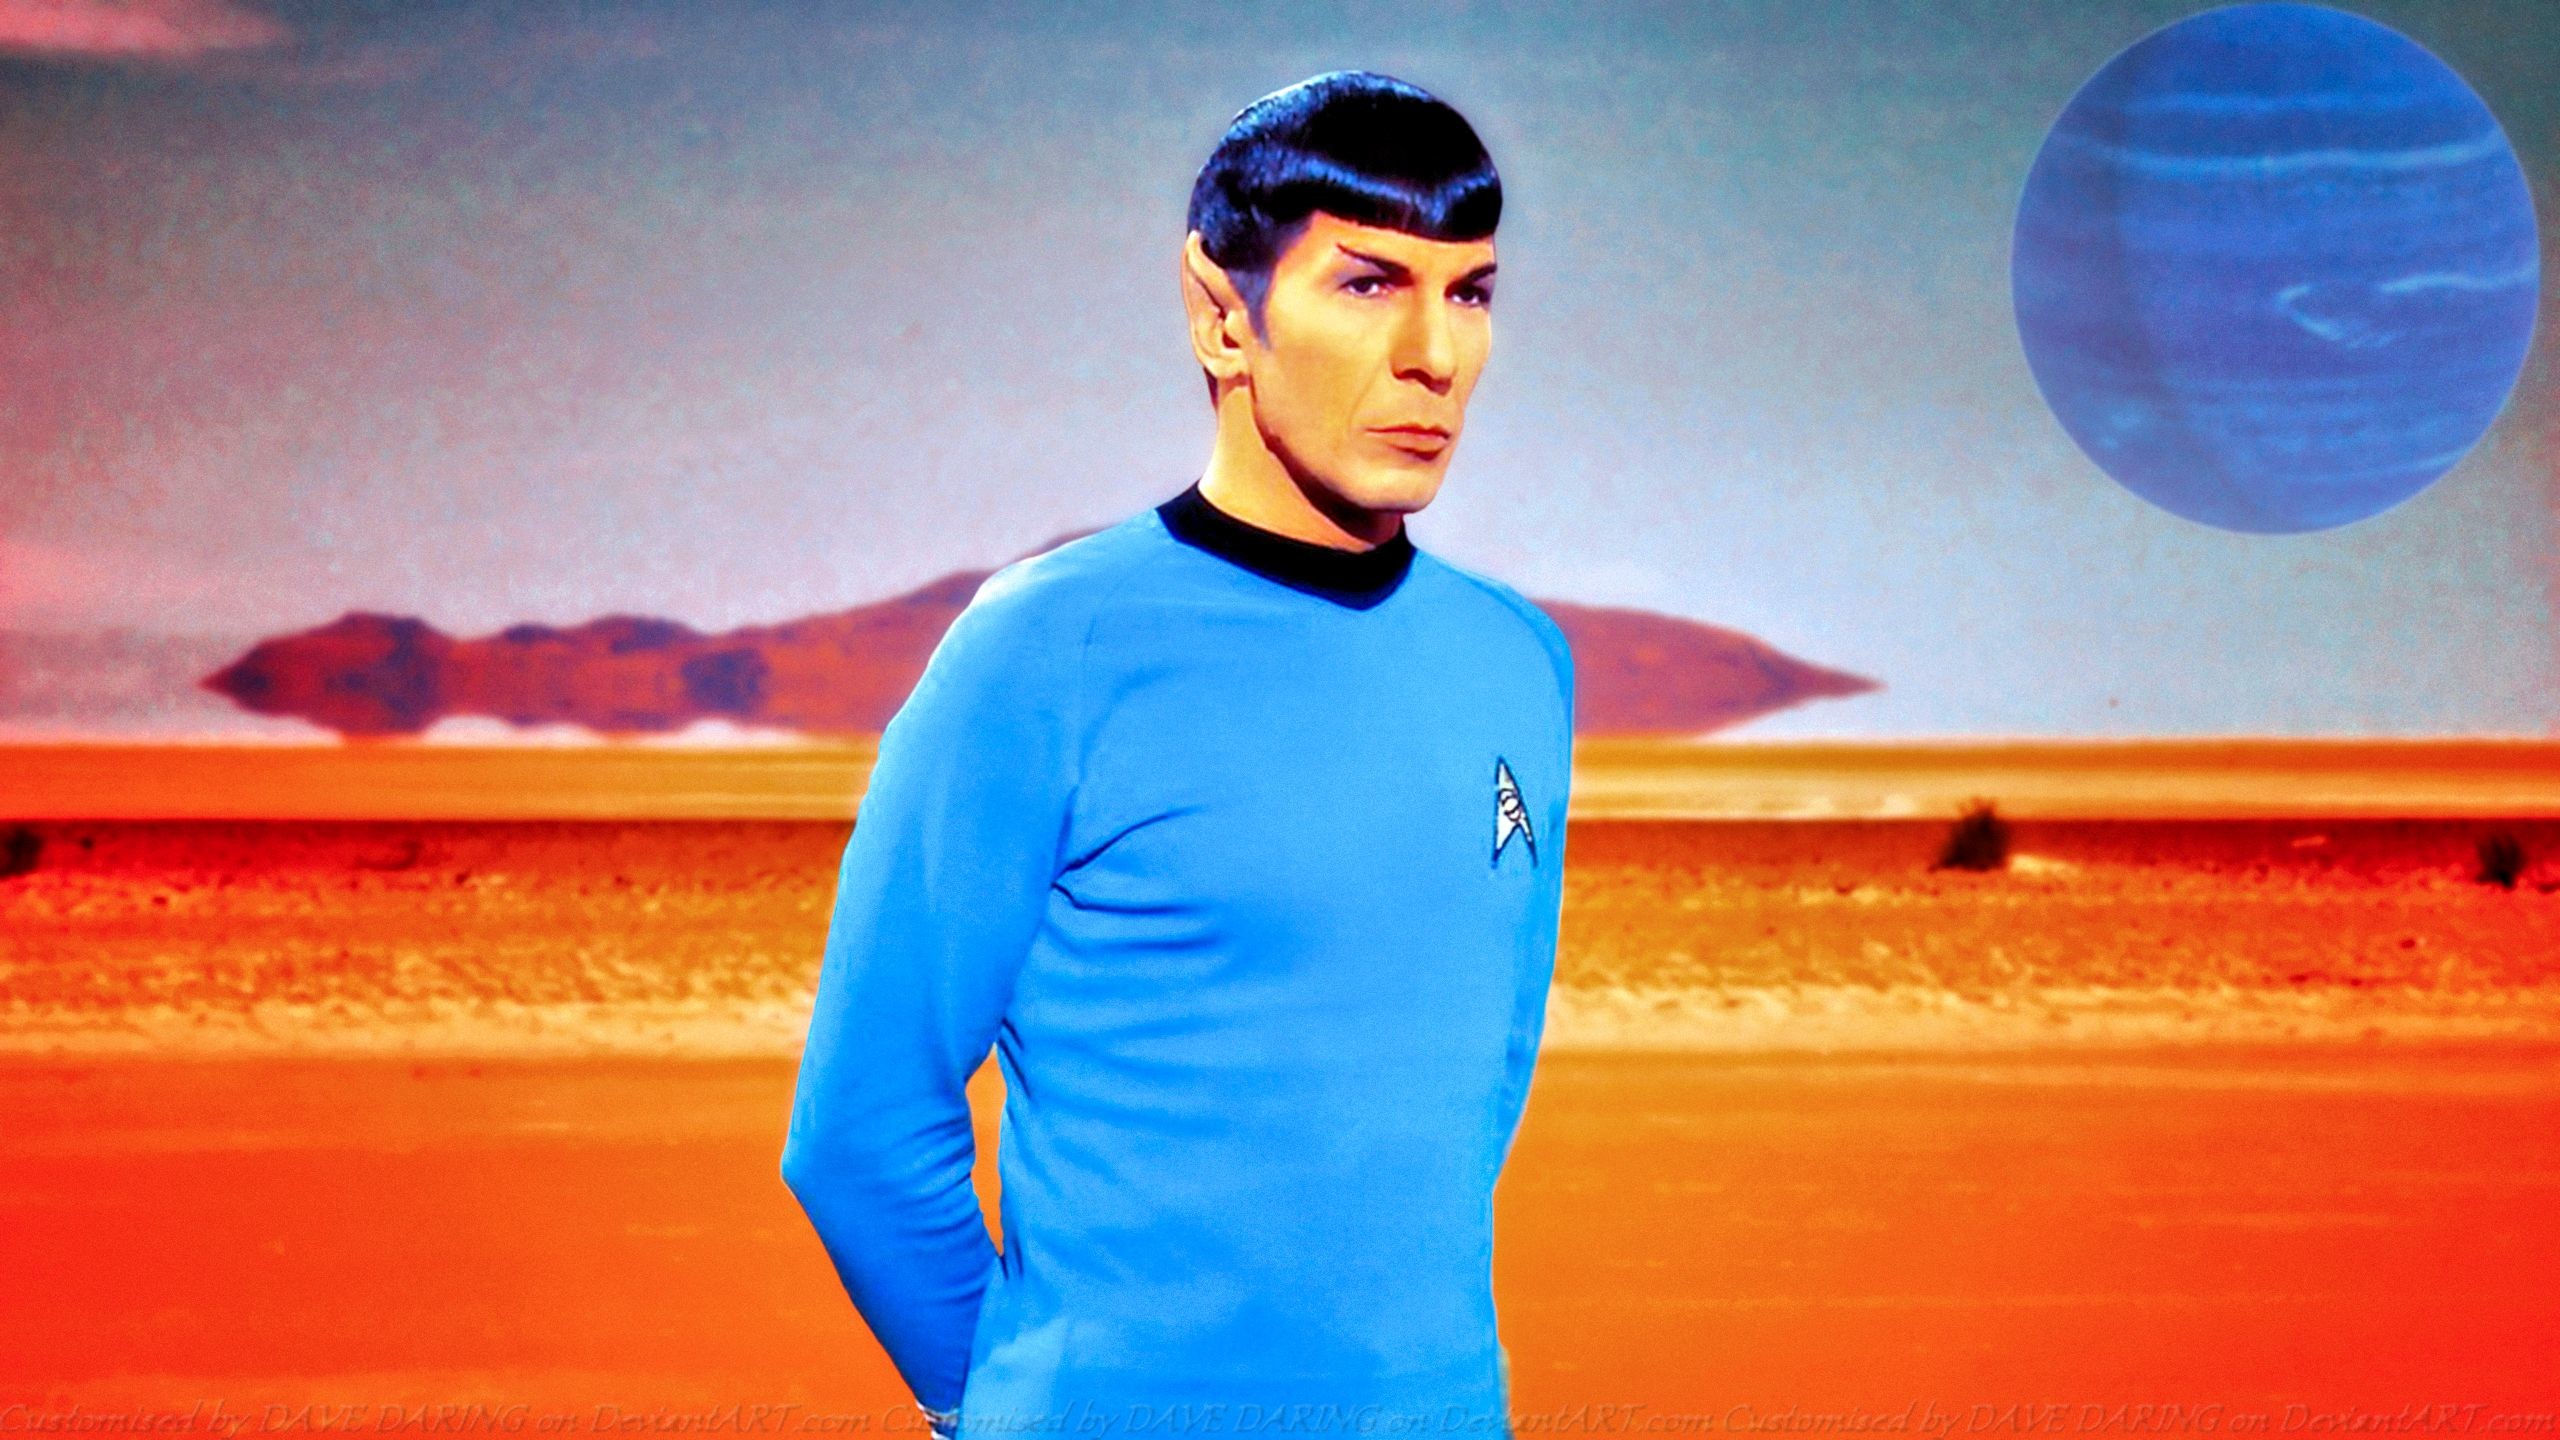 2560x1440 ... Leonard Nimoy Spock IX by Dave-Daring